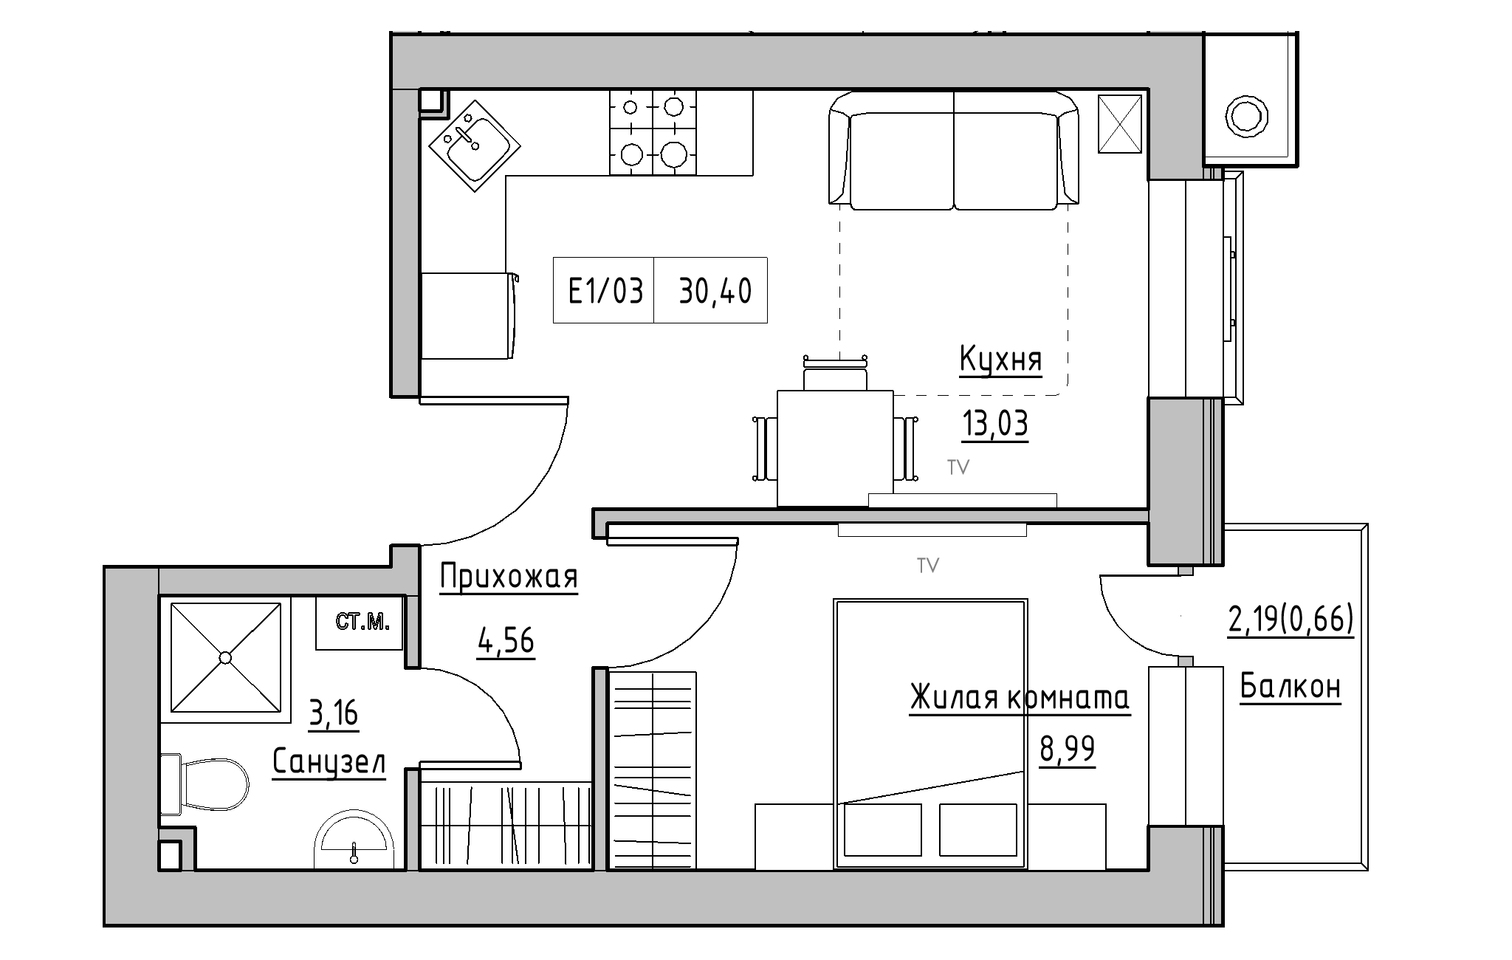 Planning 1-rm flats area 30.4m2, KS-013-03/0002.